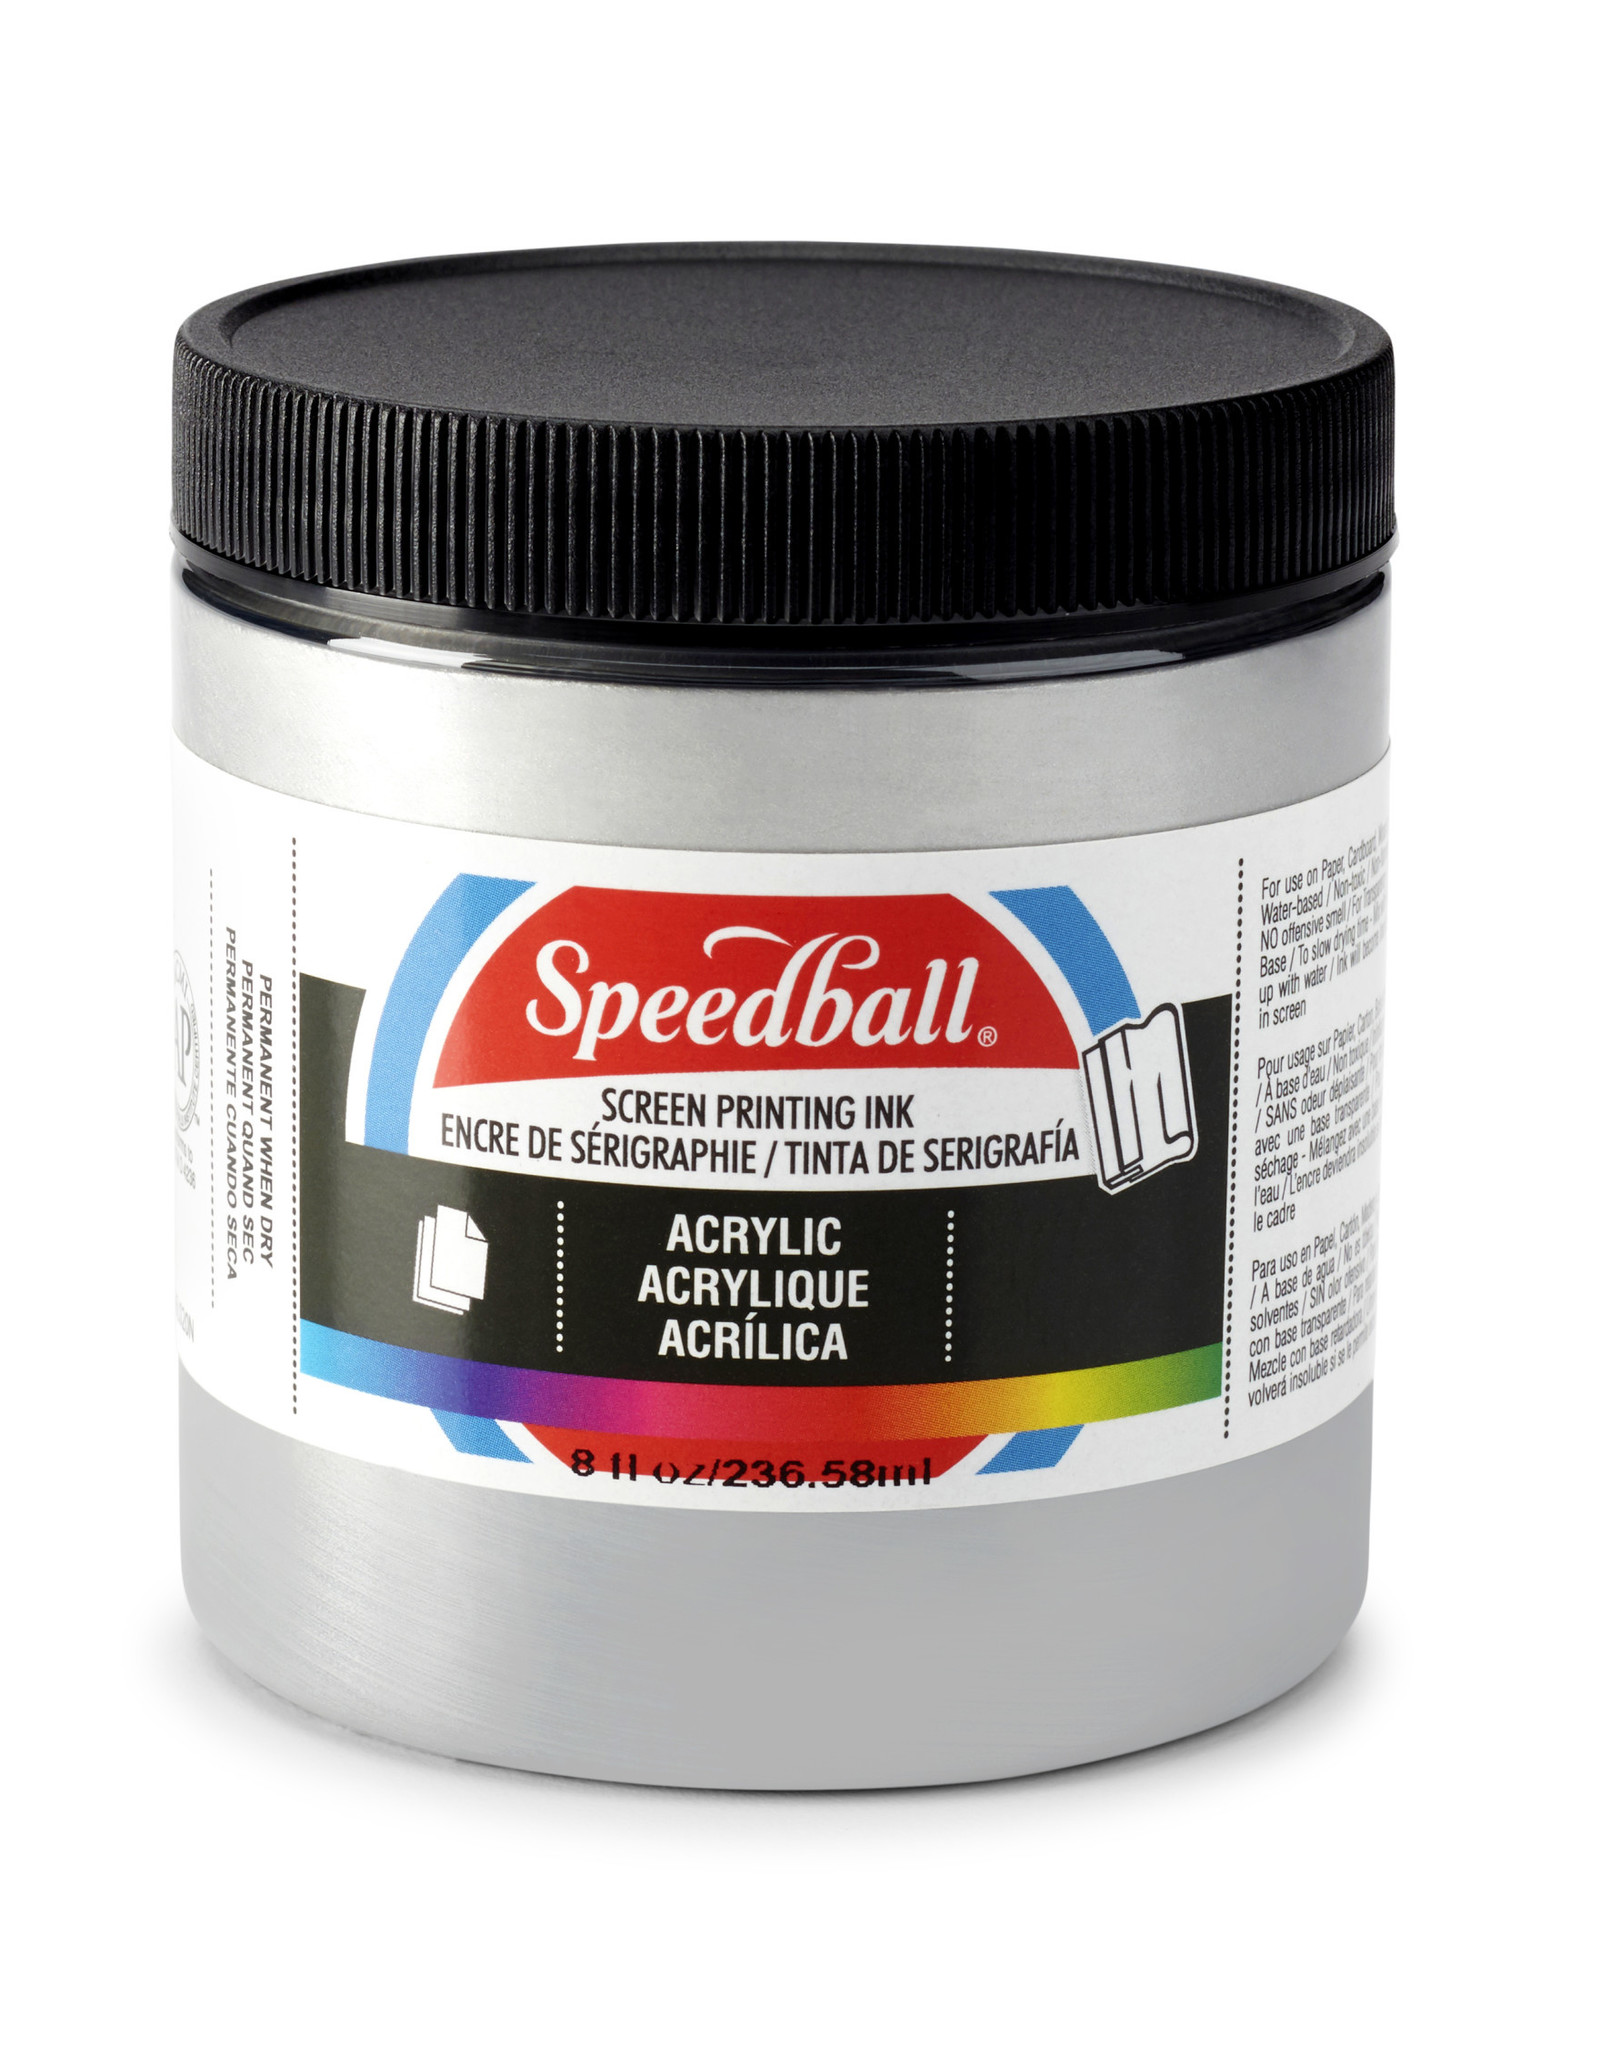 SPEEDBALL ART PRODUCTS Speedball Acrylic Screen Printing Ink, Silver, 8oz